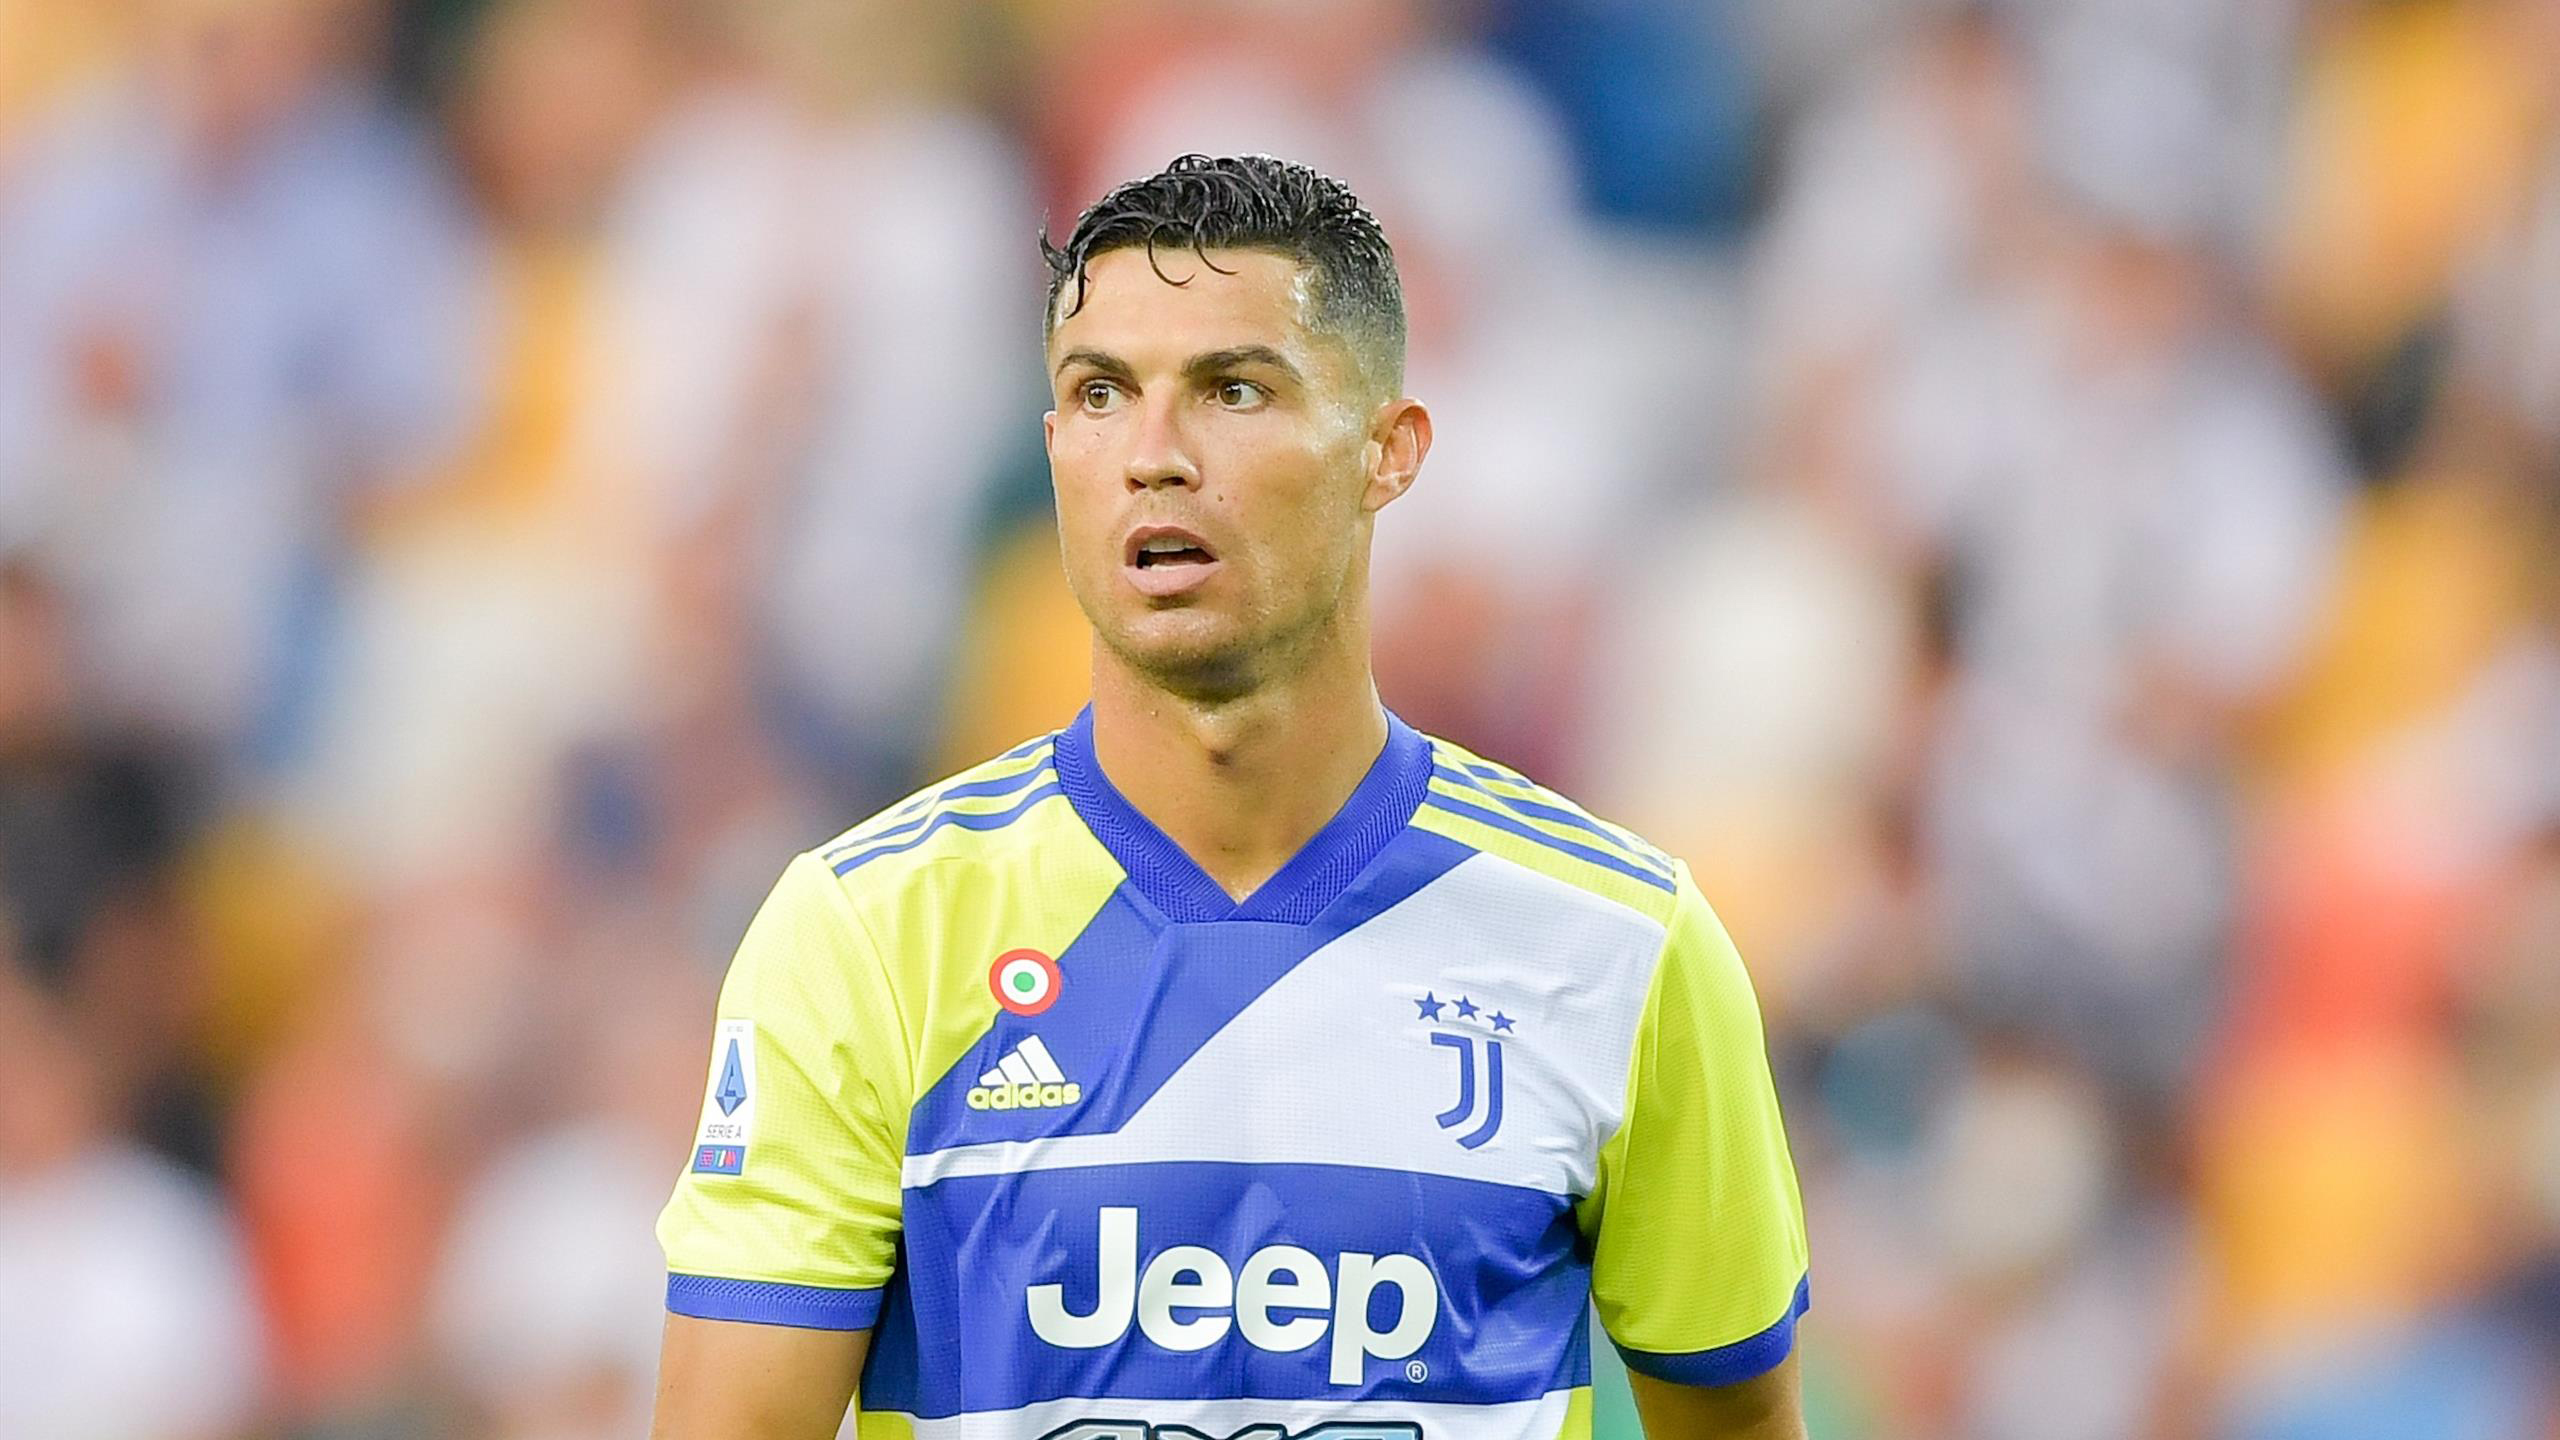 Cristiano Ronaldo CR Is Standing In Blur Audience Wallpaper Wearing Yellow Blue Sports Dress 2K Ronaldo